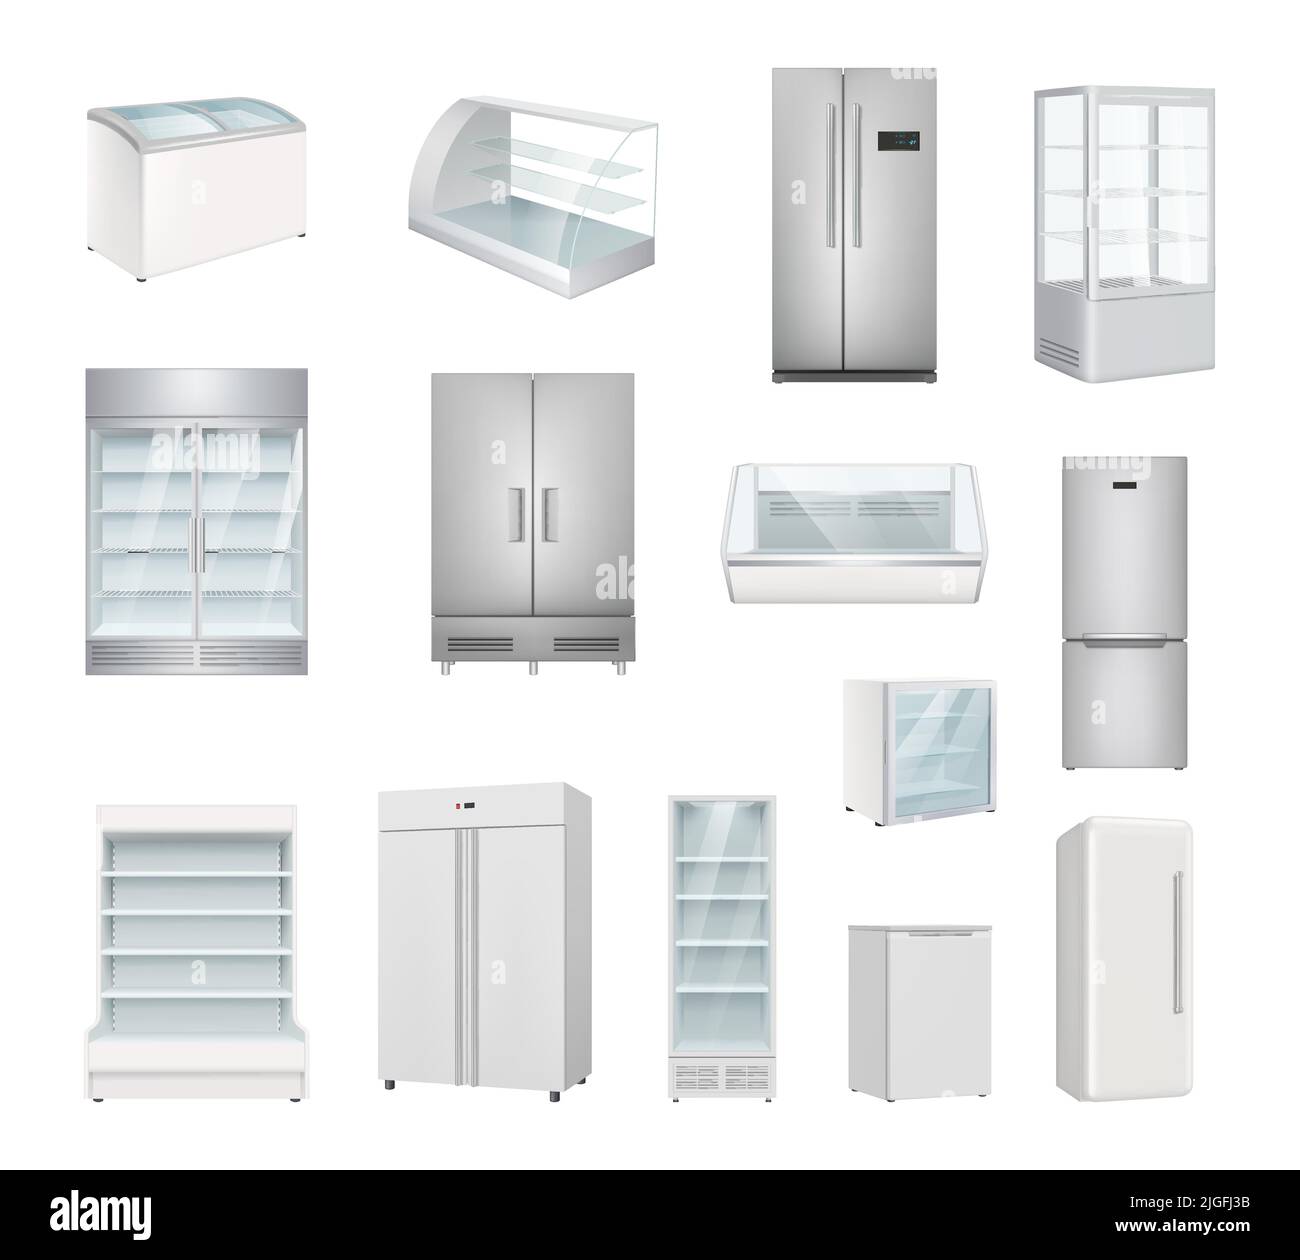 Refrigerators. Industrial and home frozen refrigerators various models decent vector illustrations in realistic style Stock Vector